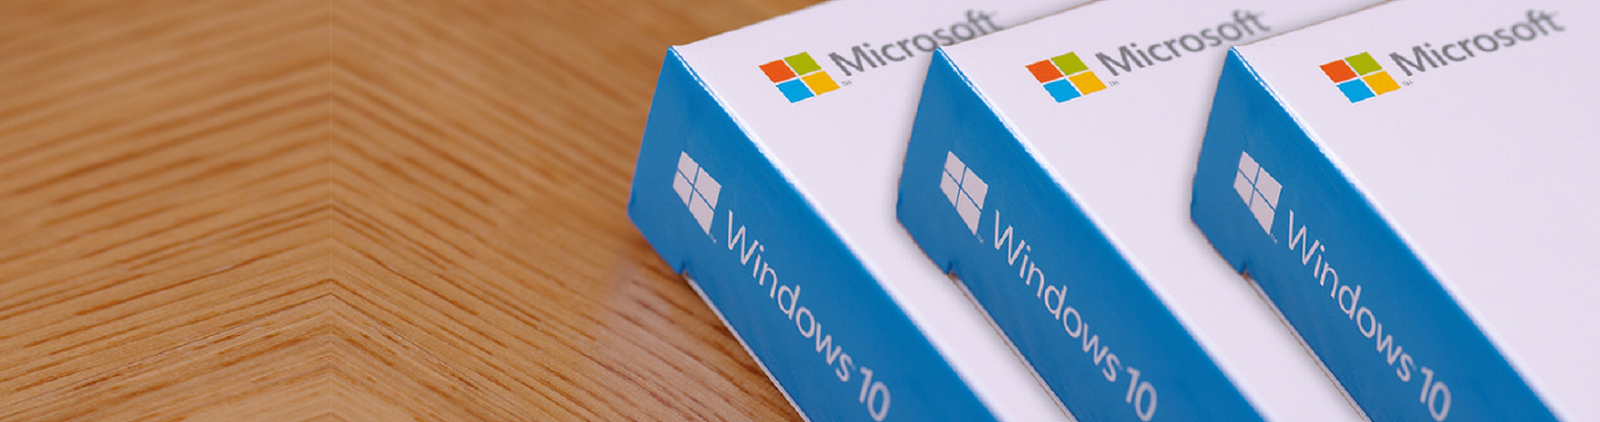 Microsoft Windows 10 전문가